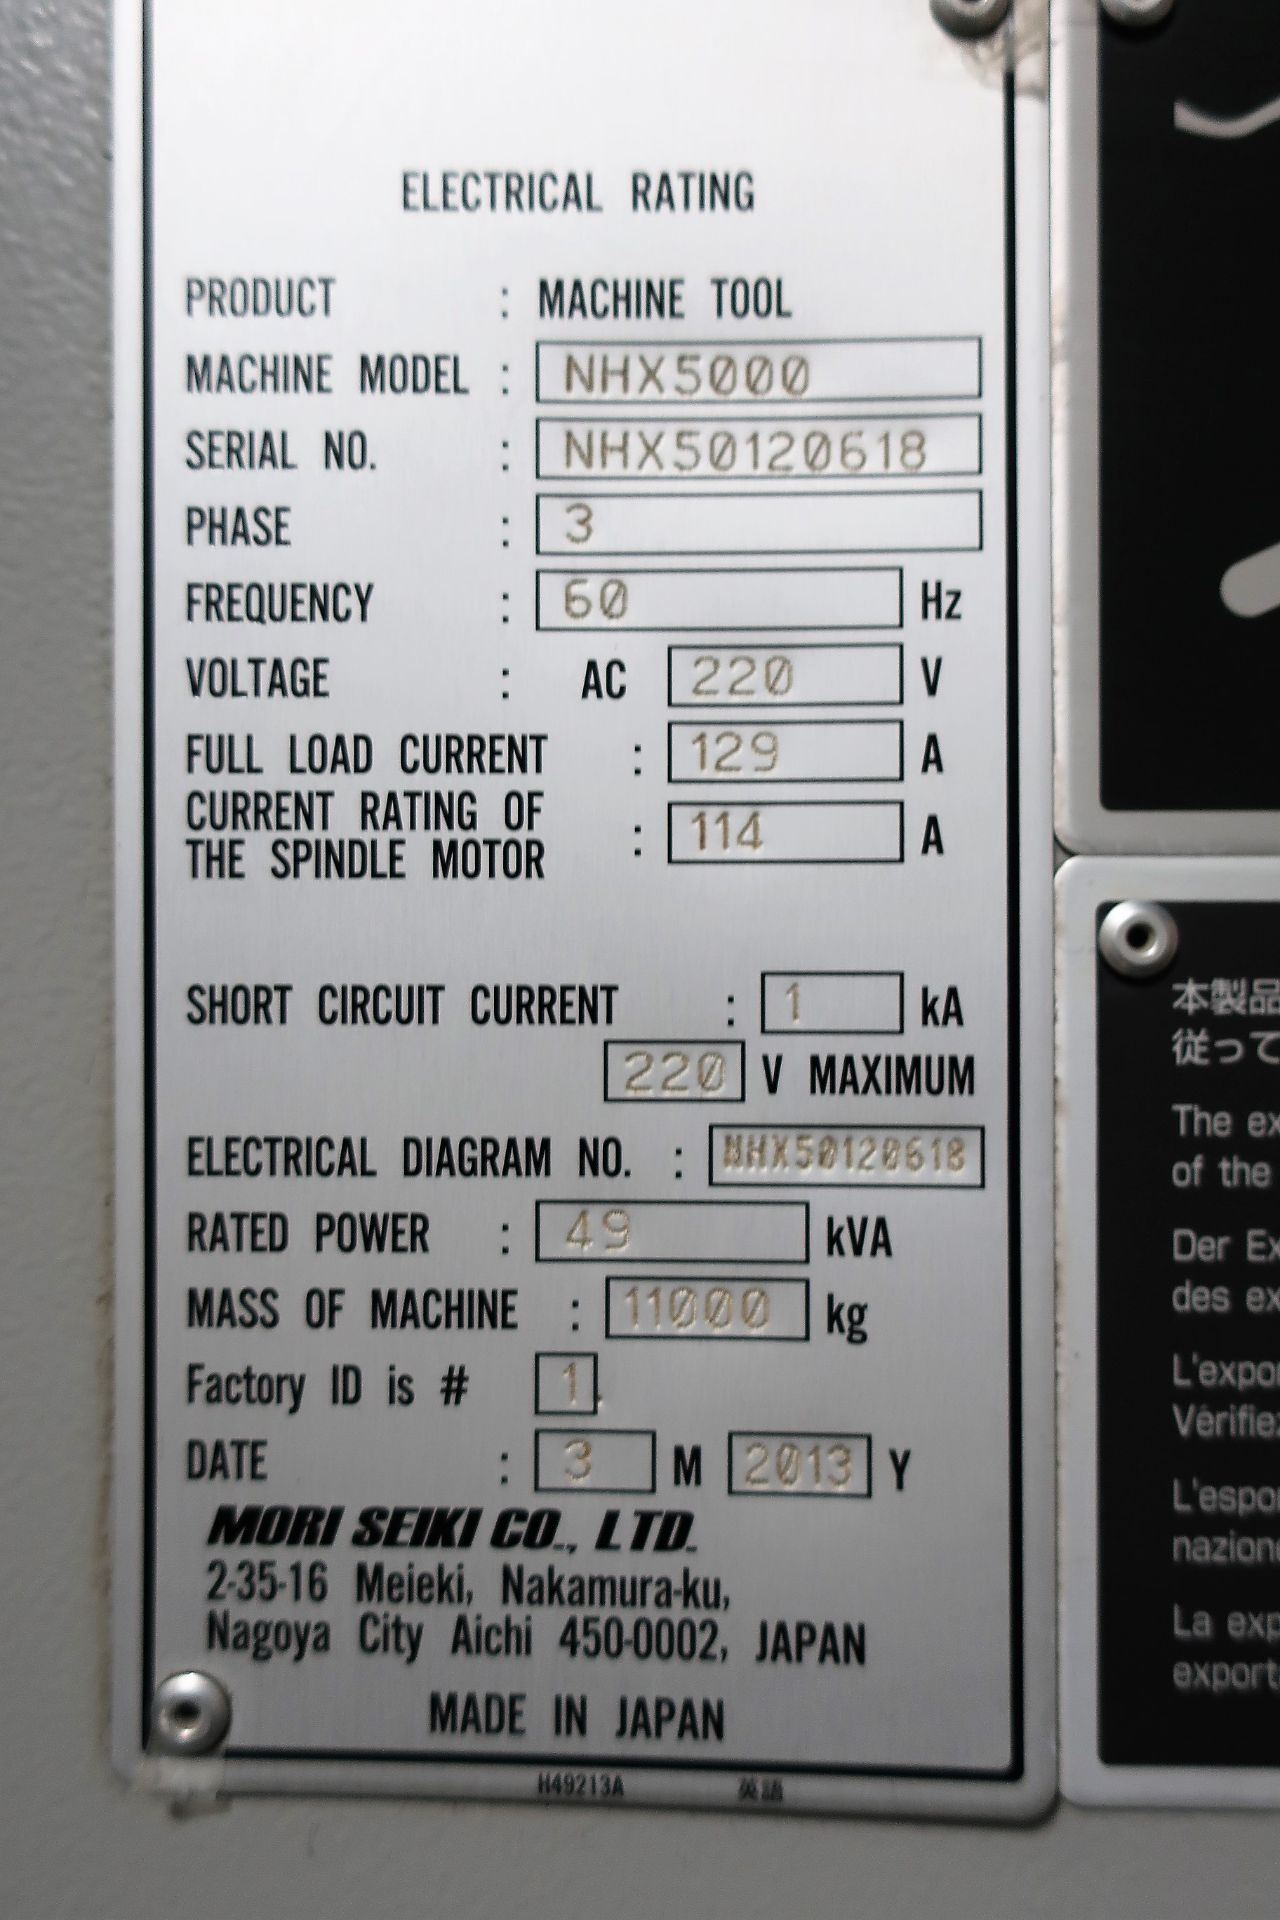 2013 DMG Mori Seiki NHX5000 4-Axis CNC Horizontal Machining Center, S/N NHX50120618 - Image 12 of 12